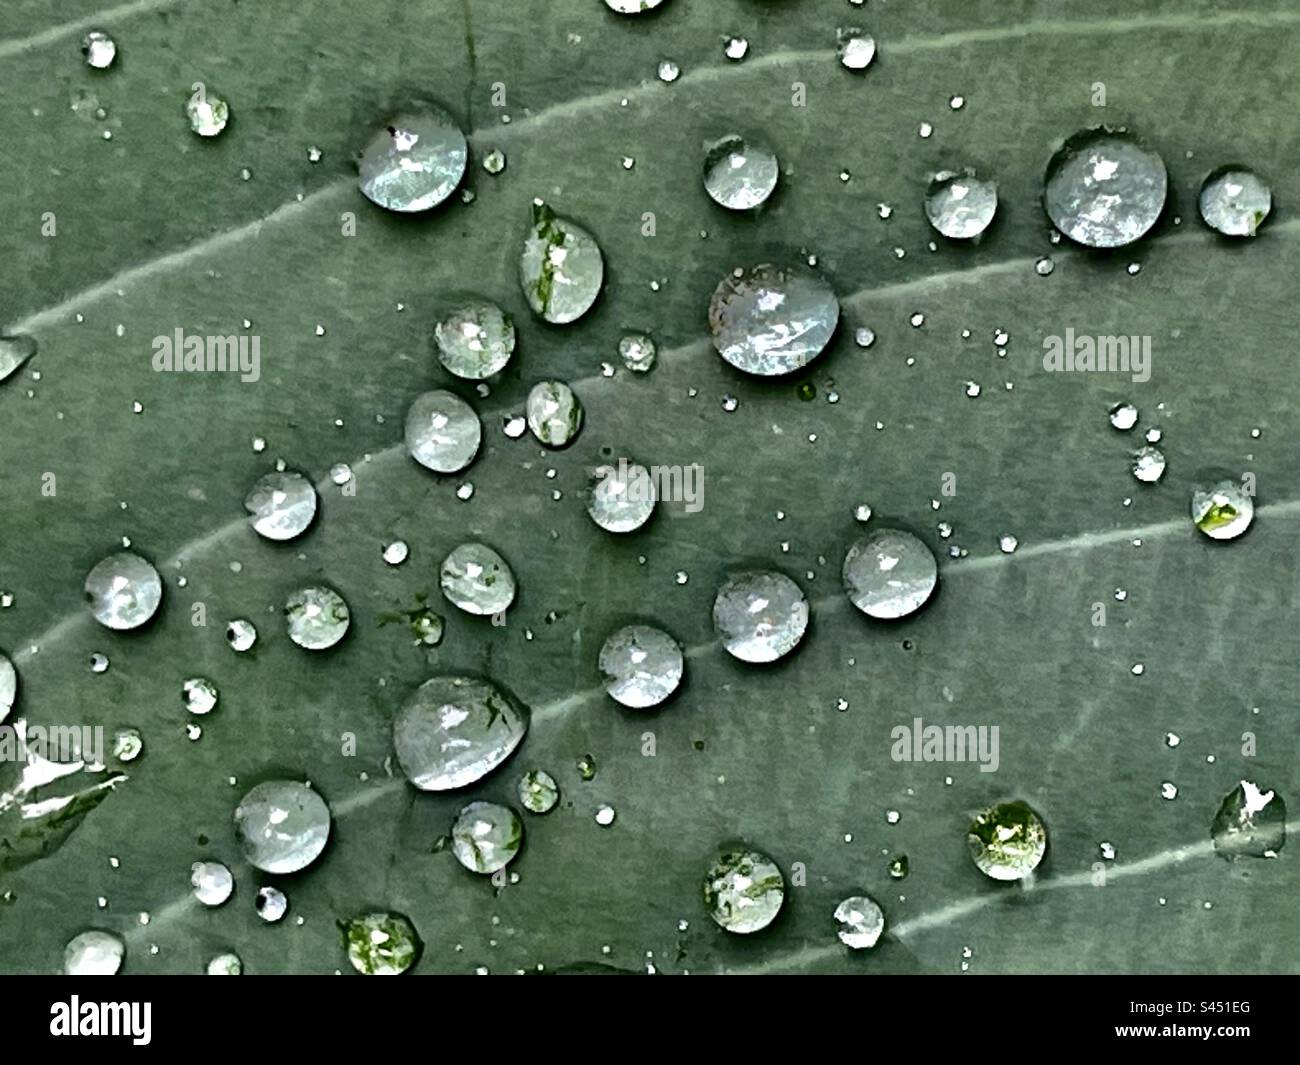 Tiny perfect drops of rain on a hosta leaf Stock Photo